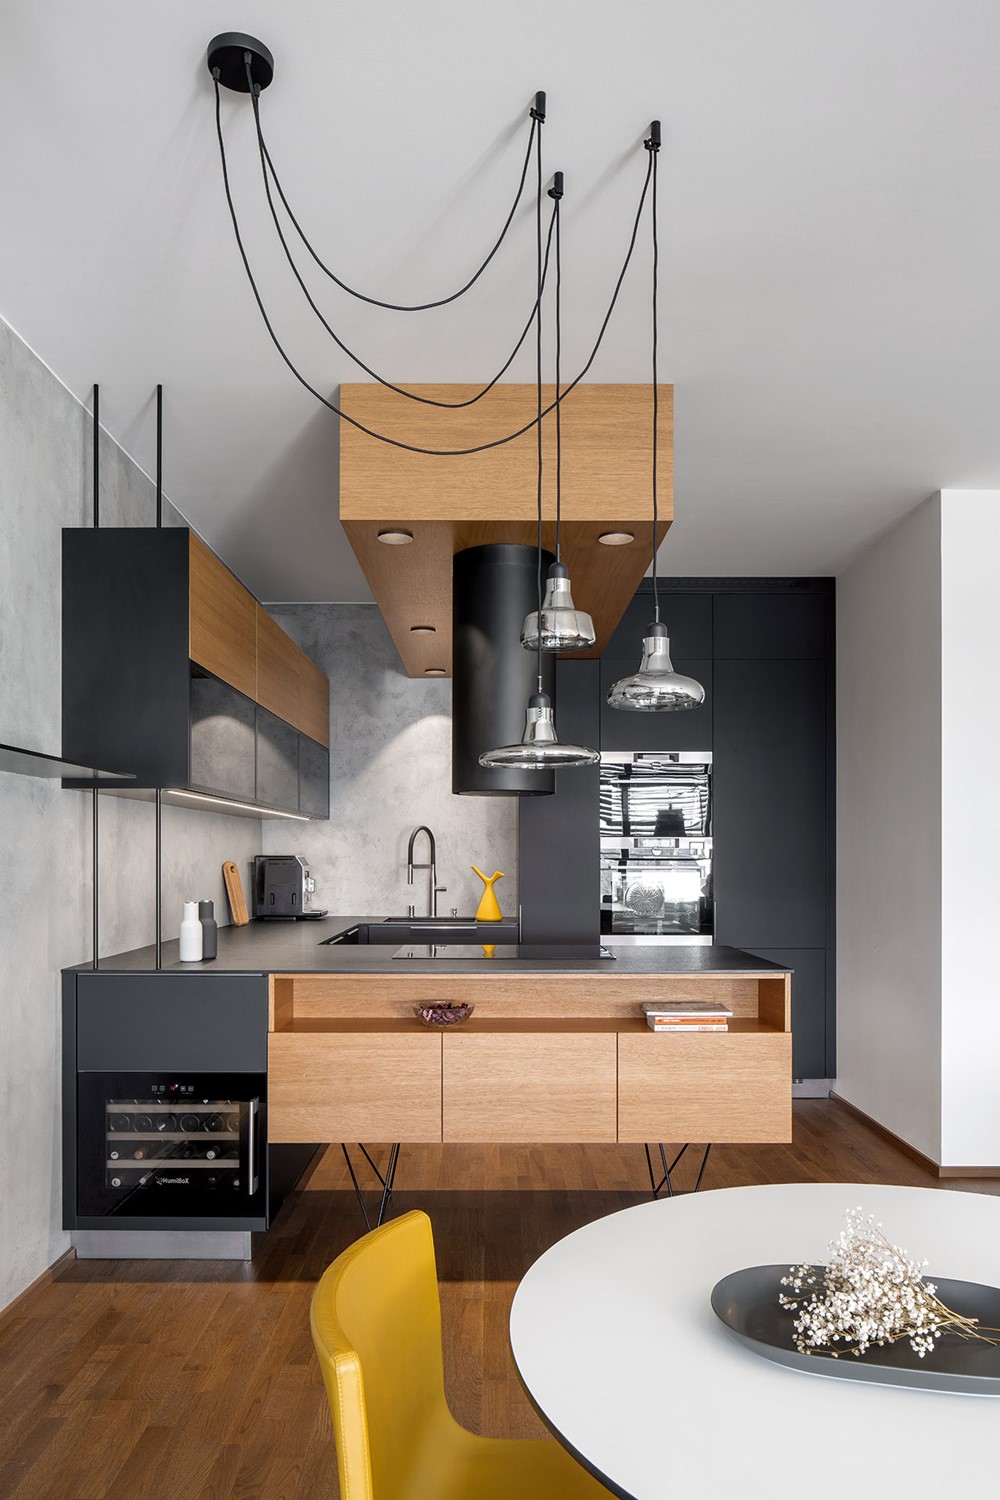 Black kitchen interior by boq architekti